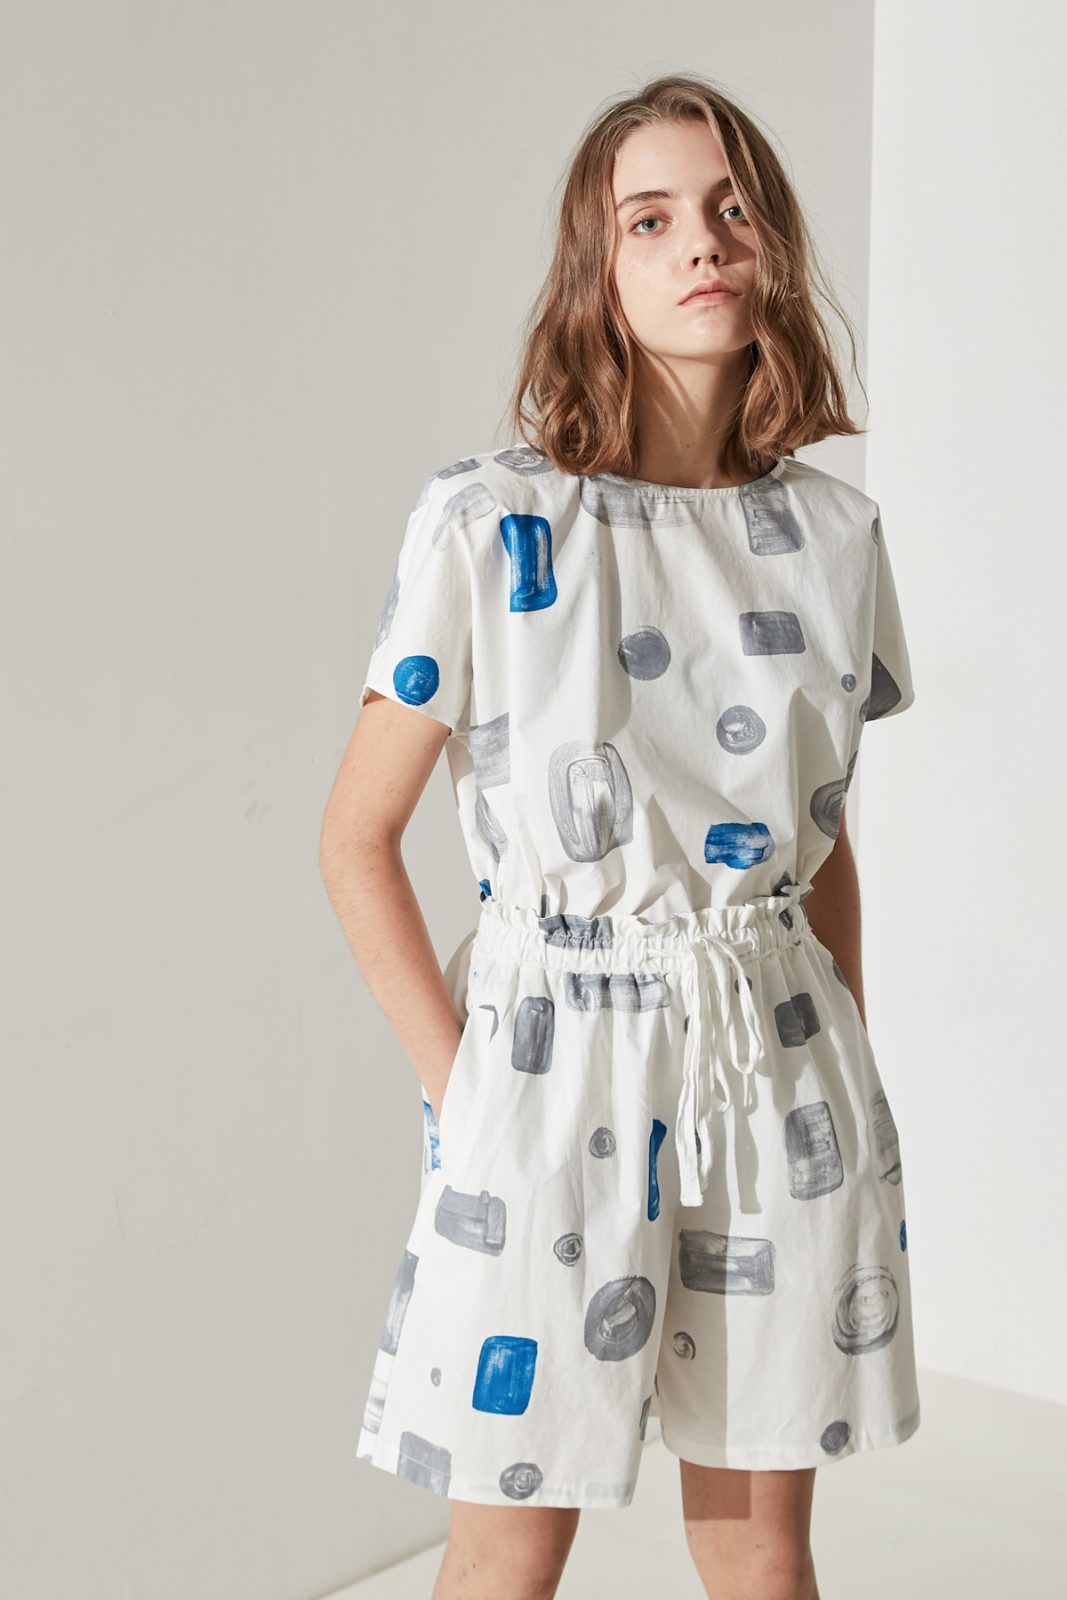 SKYE modern minimalist women clothing fashion Isla custom print top blue 1